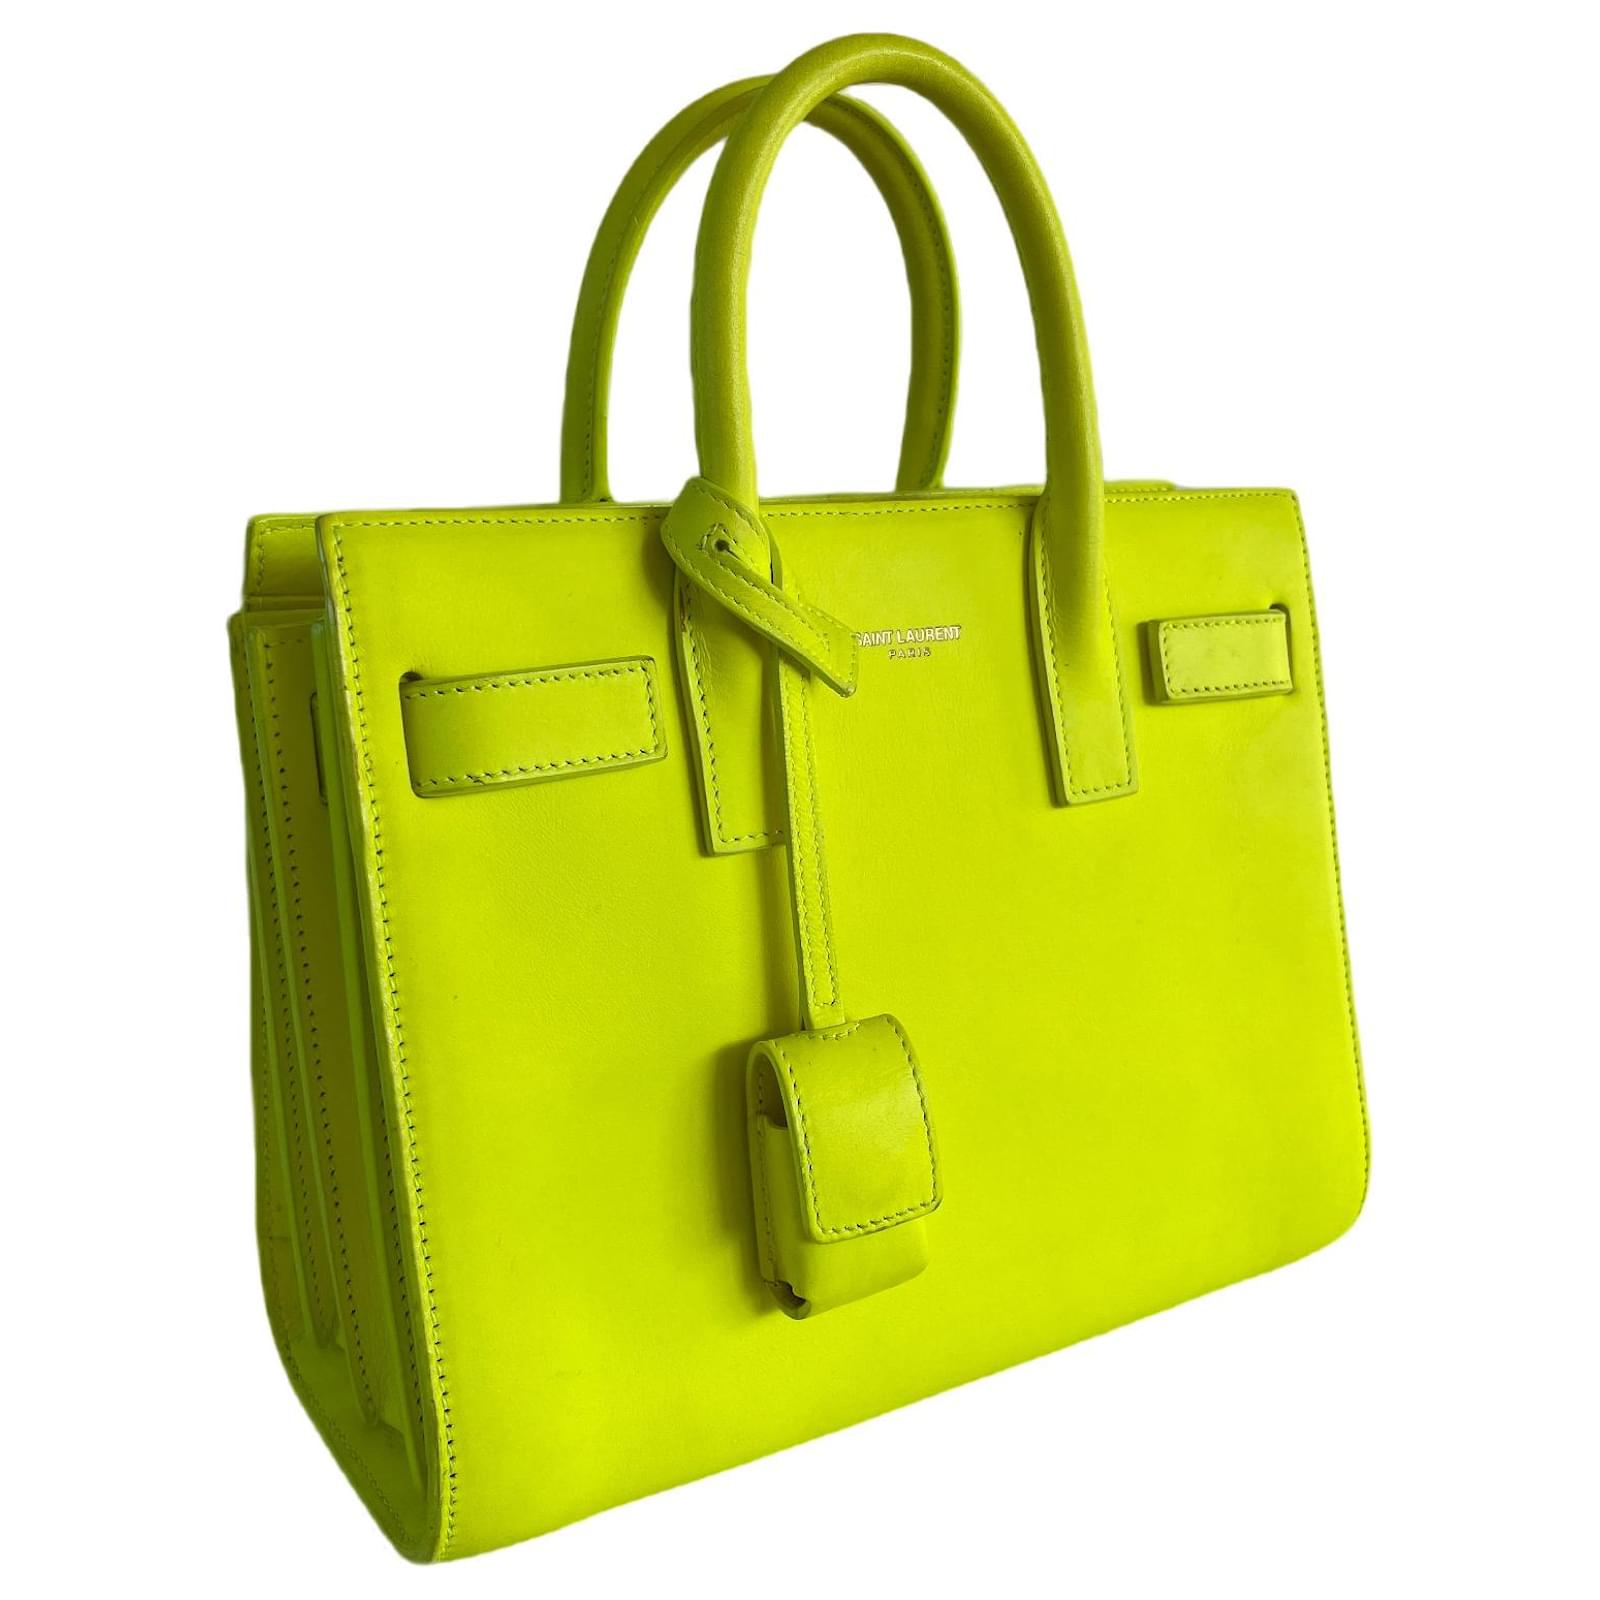 Saint Laurent Sac De Jour Nano Leather Bag In Yellow